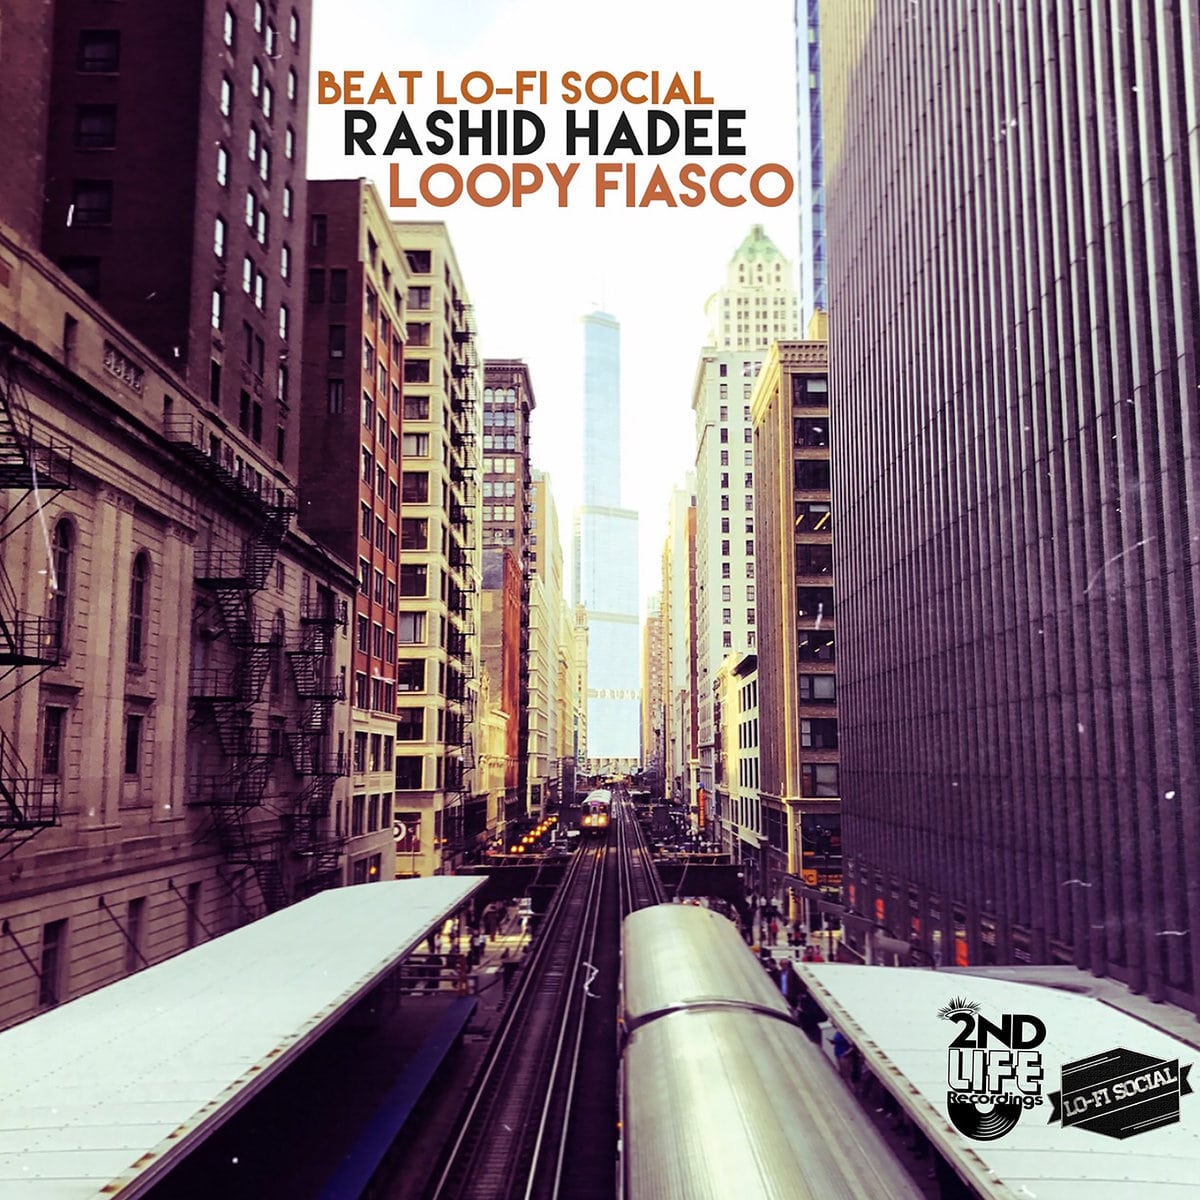 Rashid Hadee - "Loopy Fiasco" (Release)